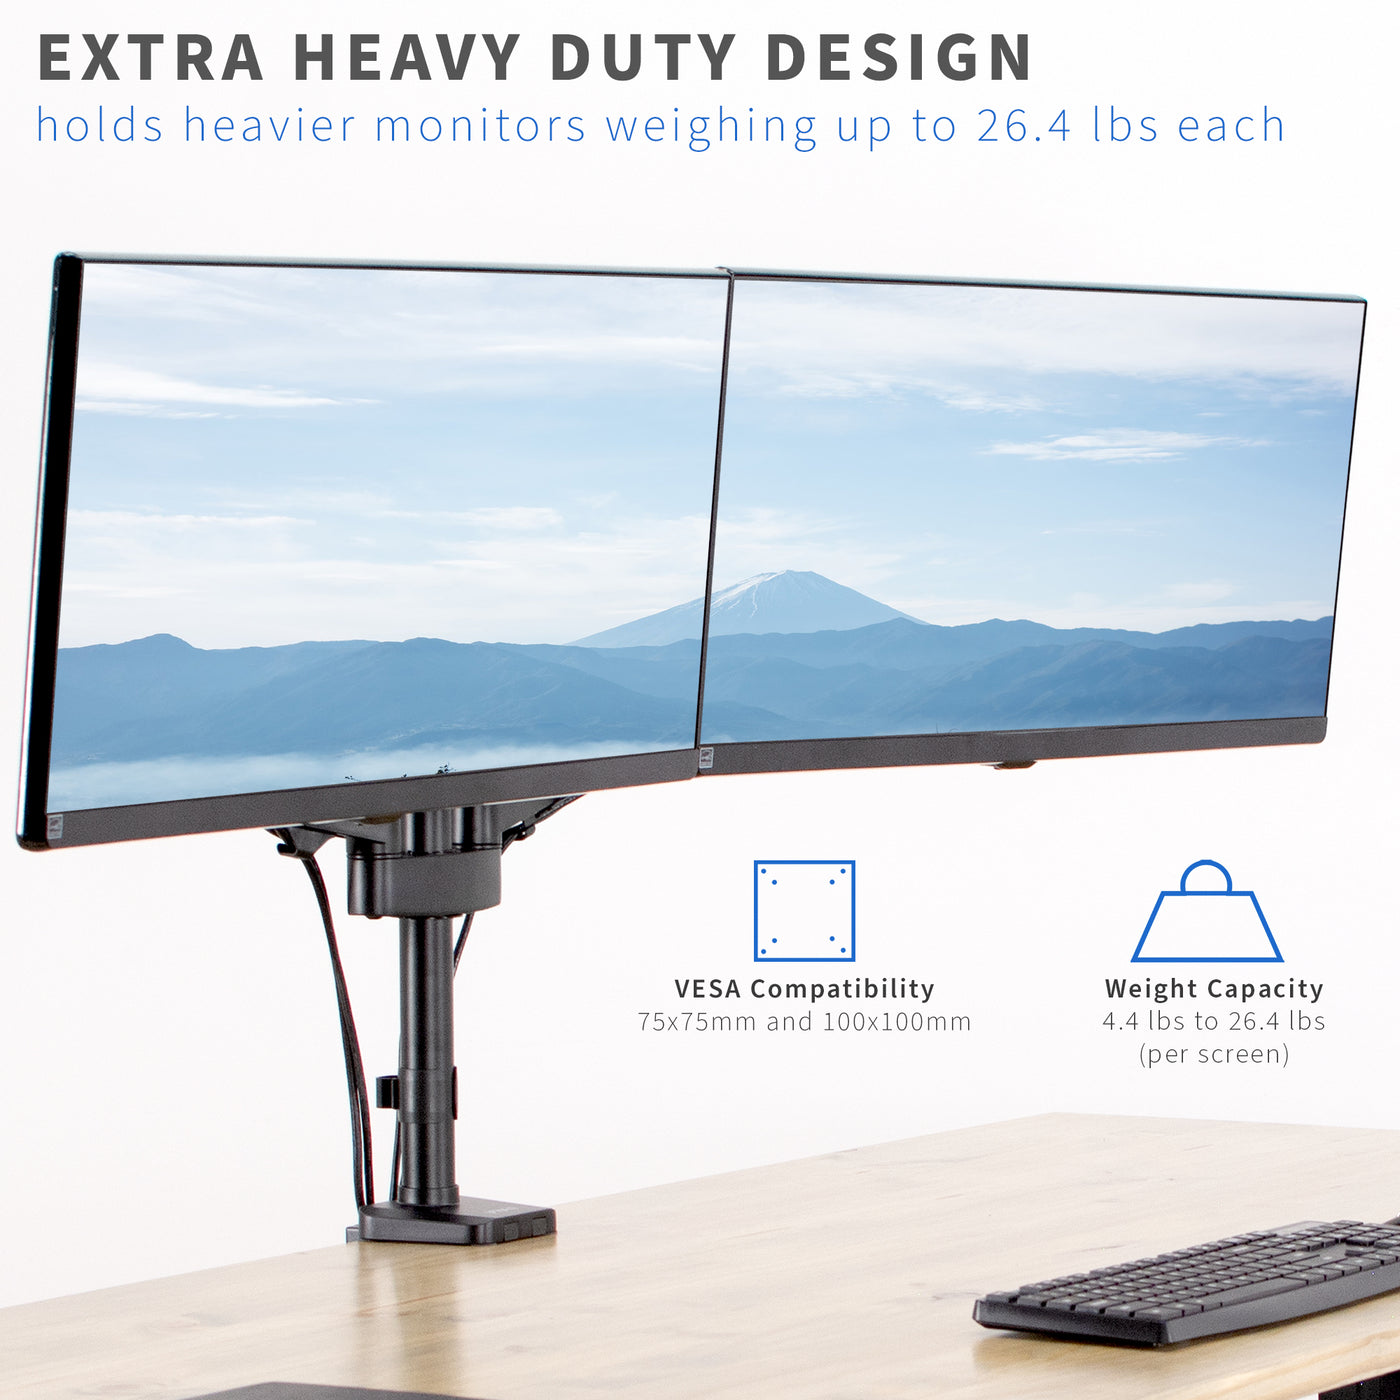 Heavy Duty VESA Compatible Pneumatic Arm Dual Monitor Desk Mount